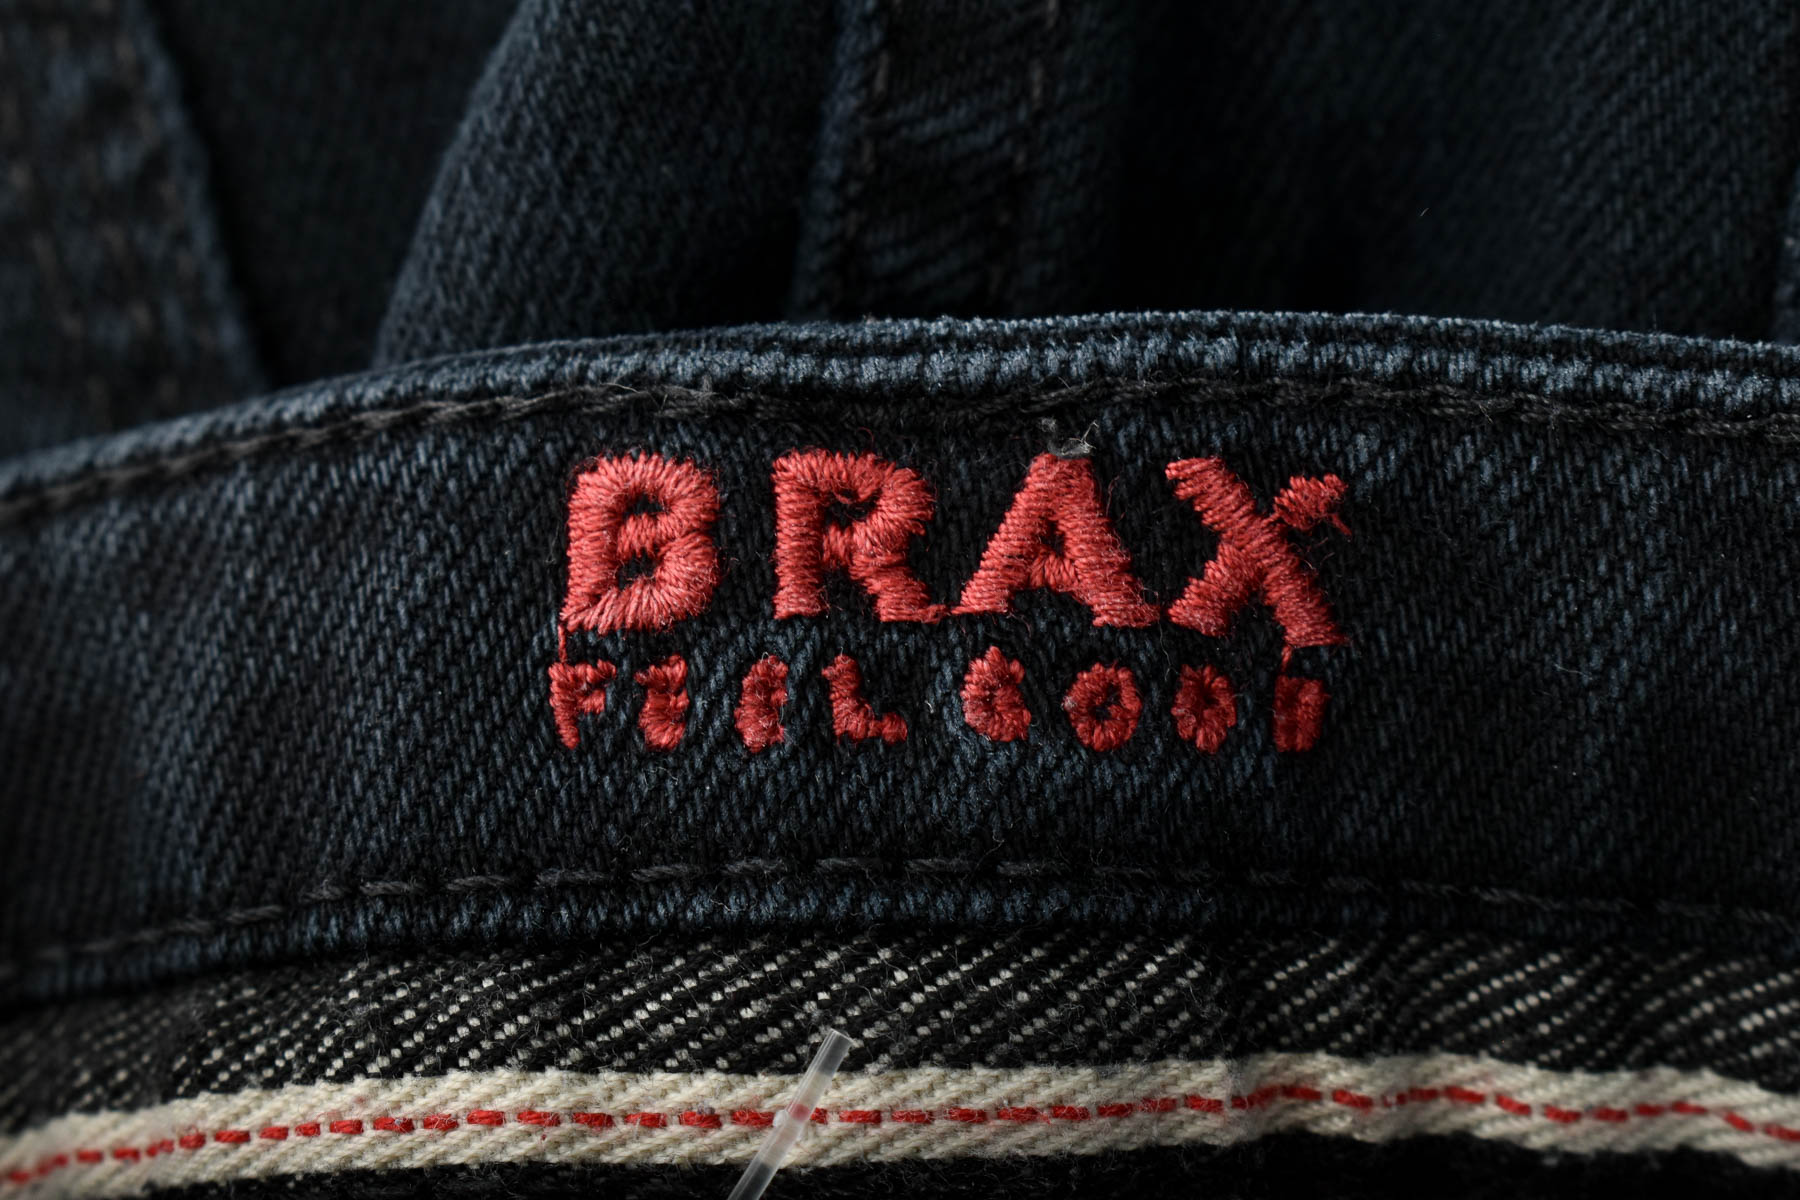 Men's jeans - BRAX - 2